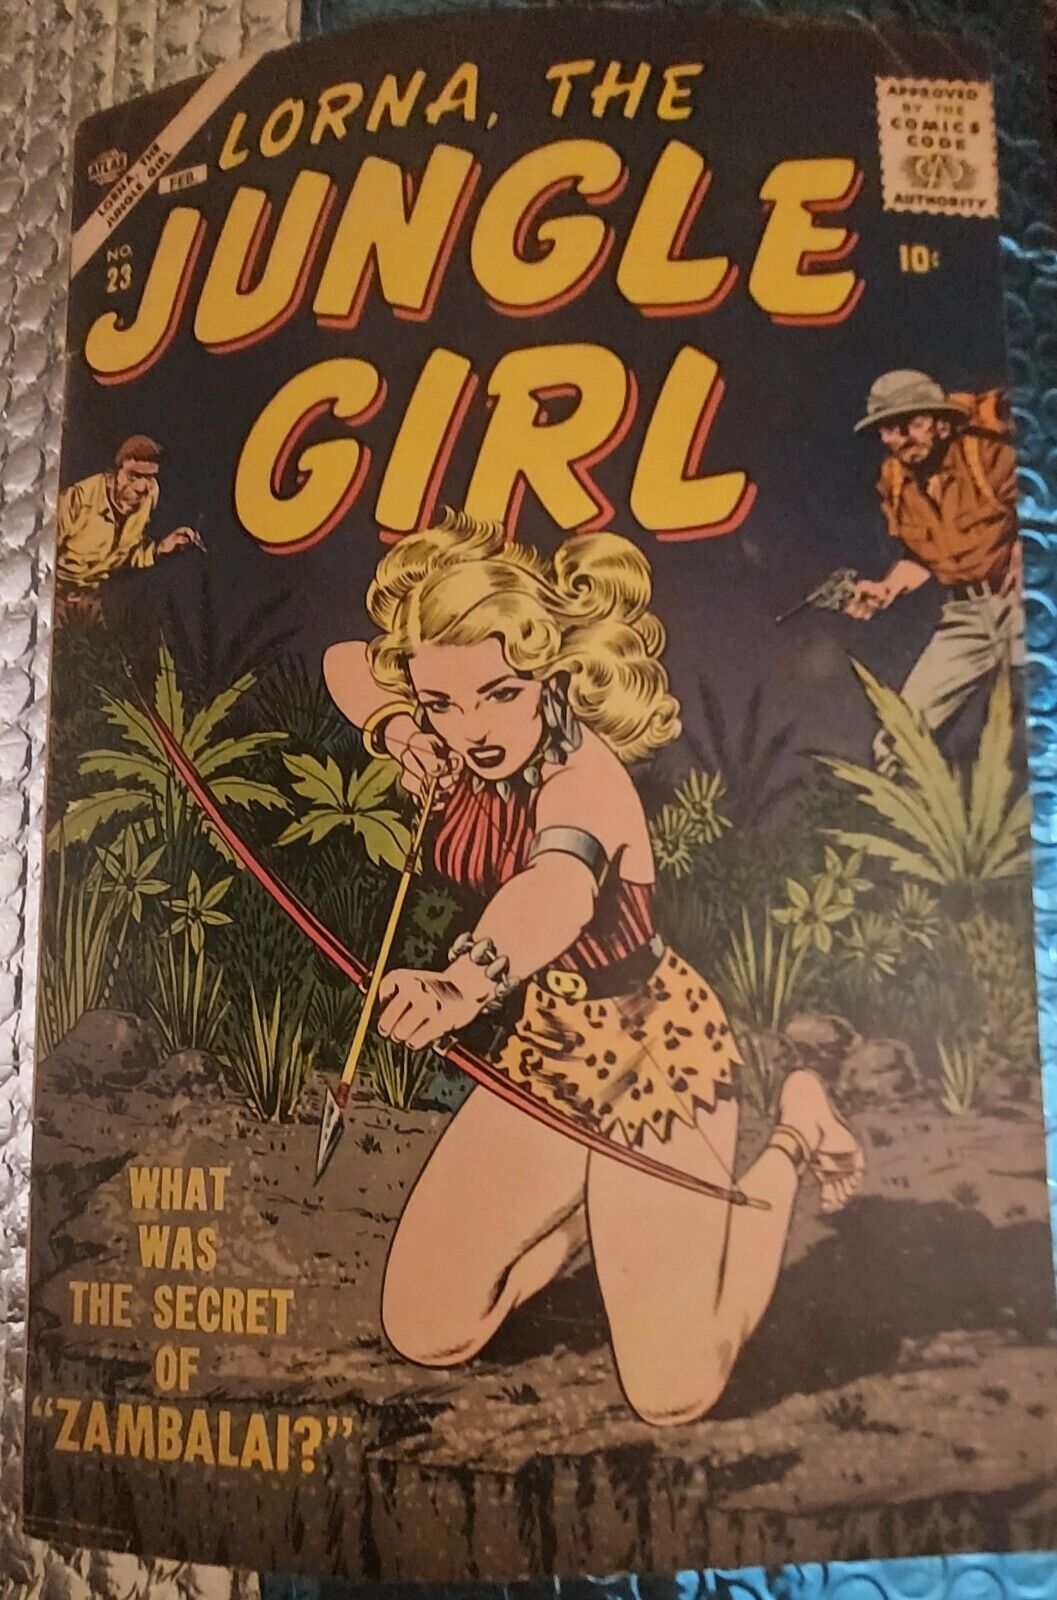 2/1957 LORNA JUNGLE GIRL #23 ATLAS COMIC BOOK NICE  VG CONDITION COMPLETE GGA